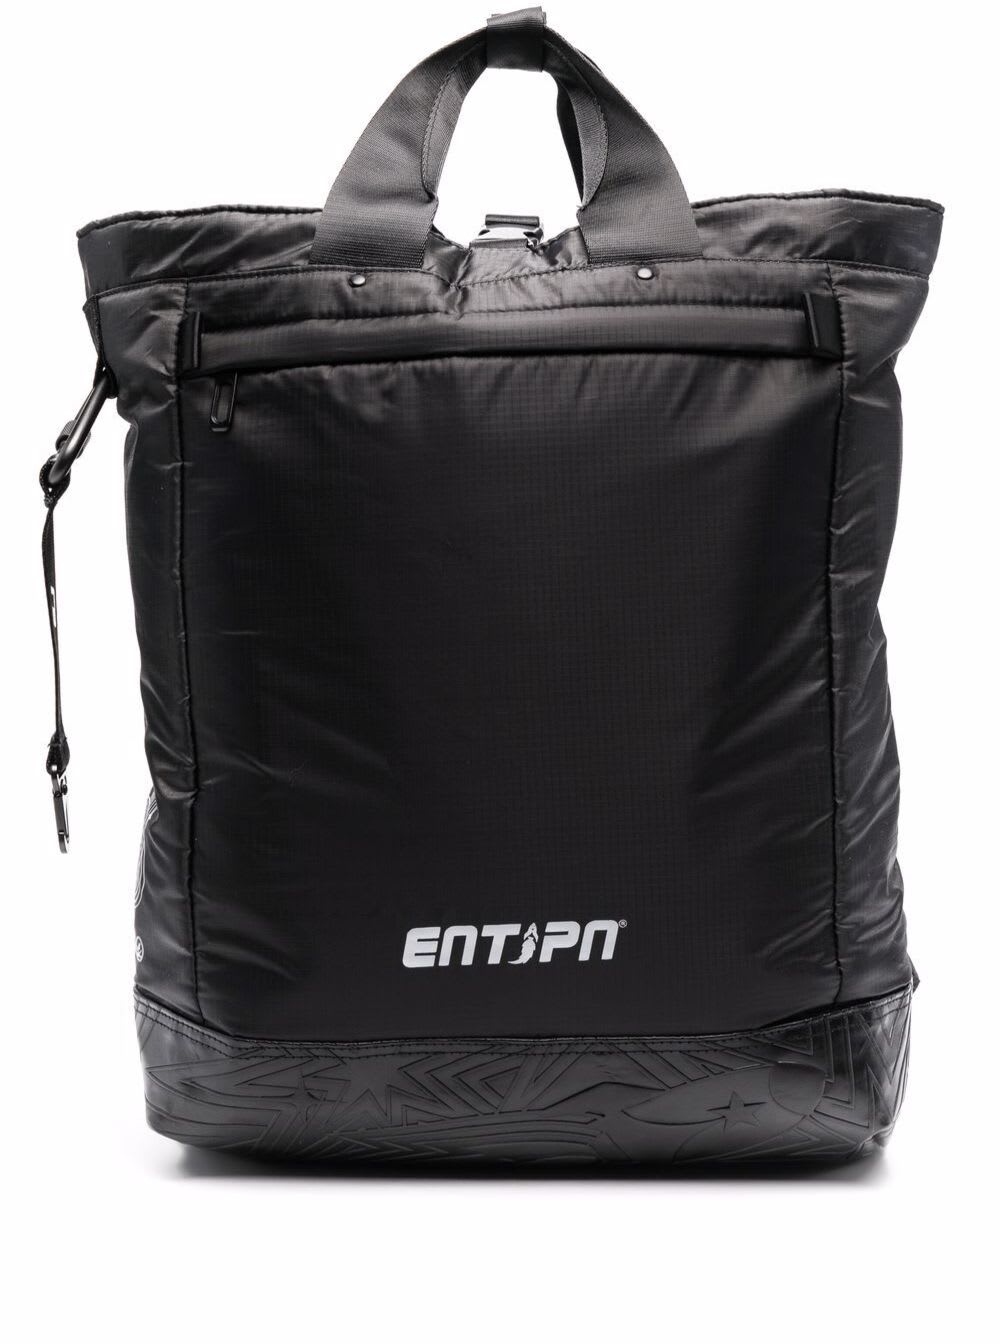 Enterprise Japan Mans Black Fabric Backpack With Logo